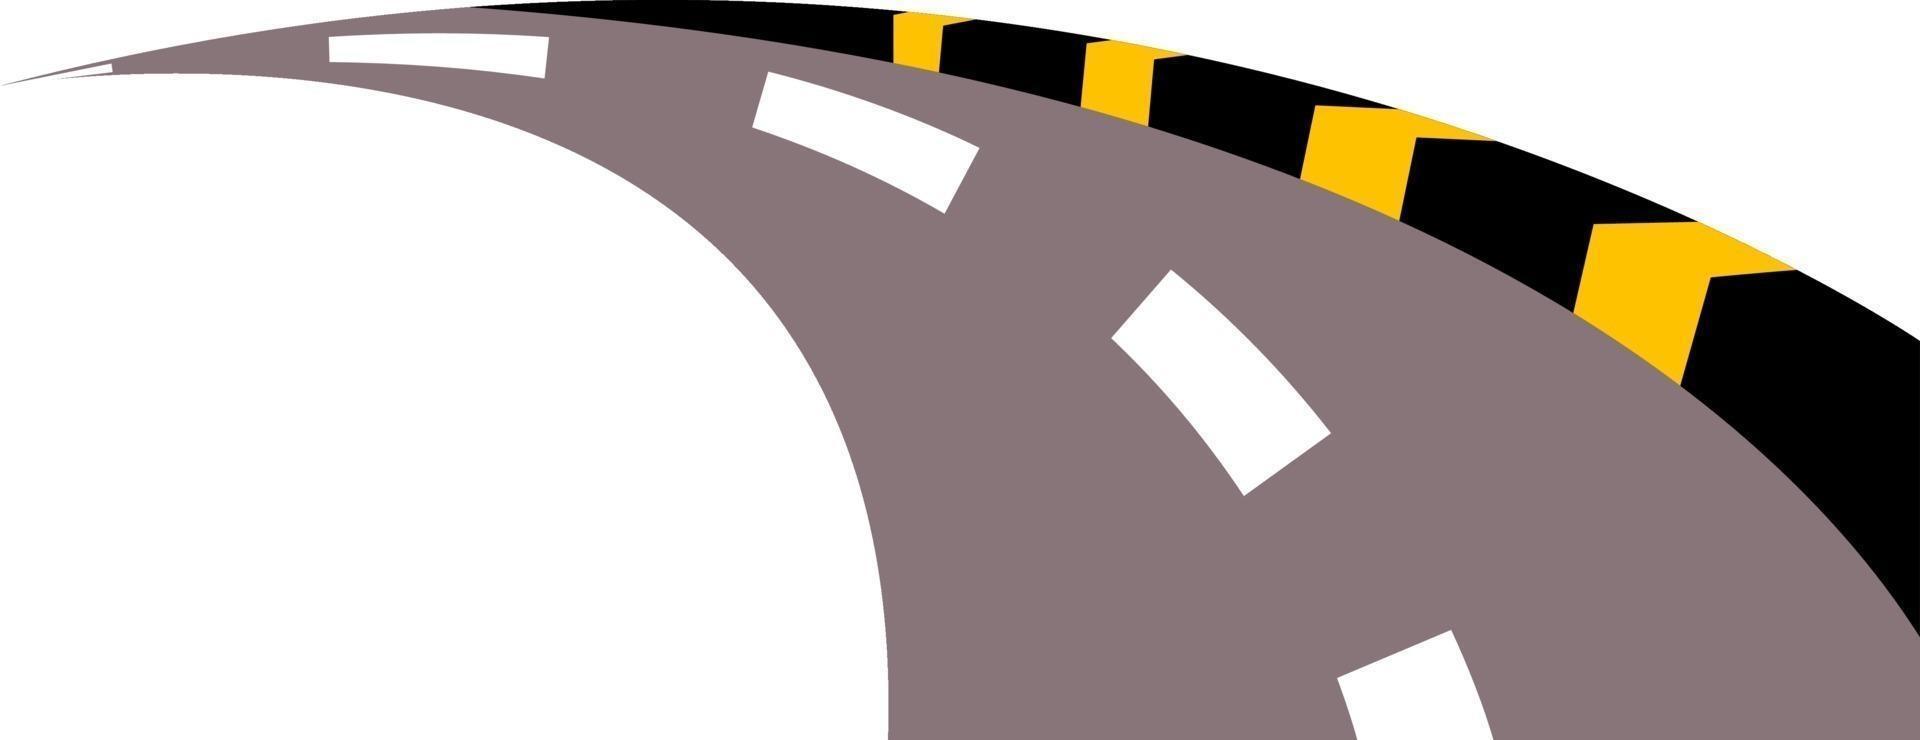 Street road, illustration, vector on white background